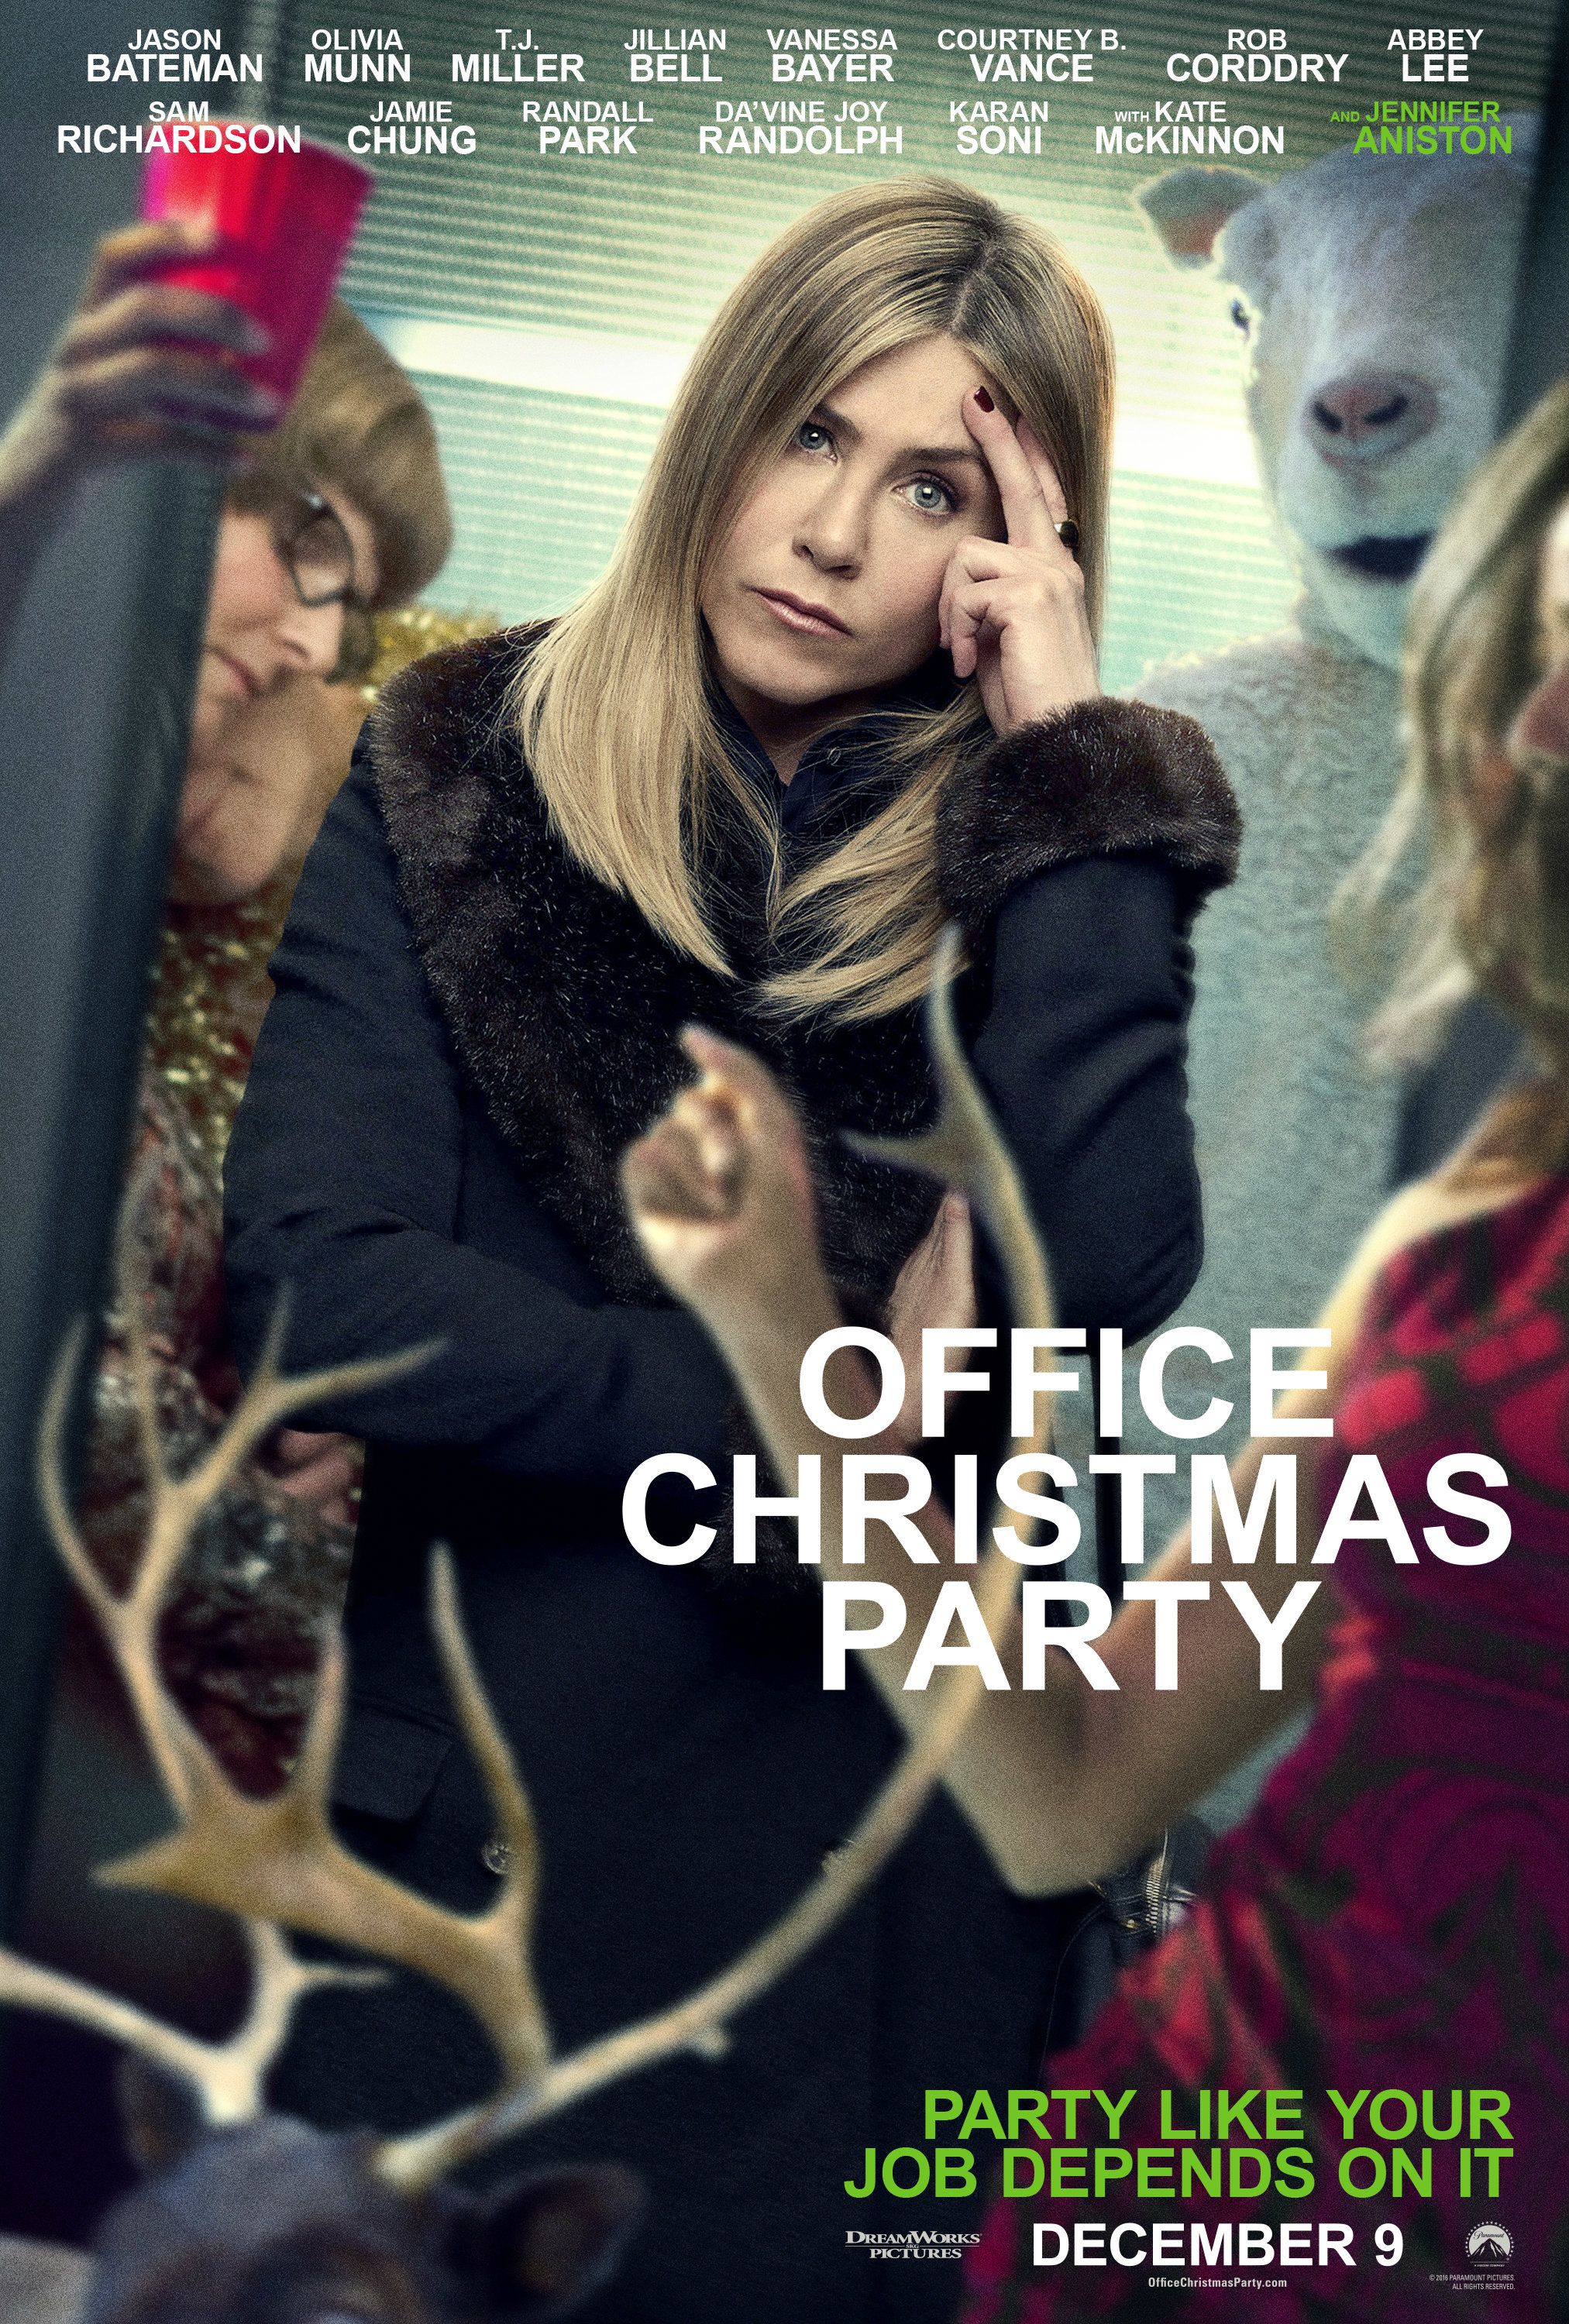 Office Christmas Party Poster - Jennifer Aniston